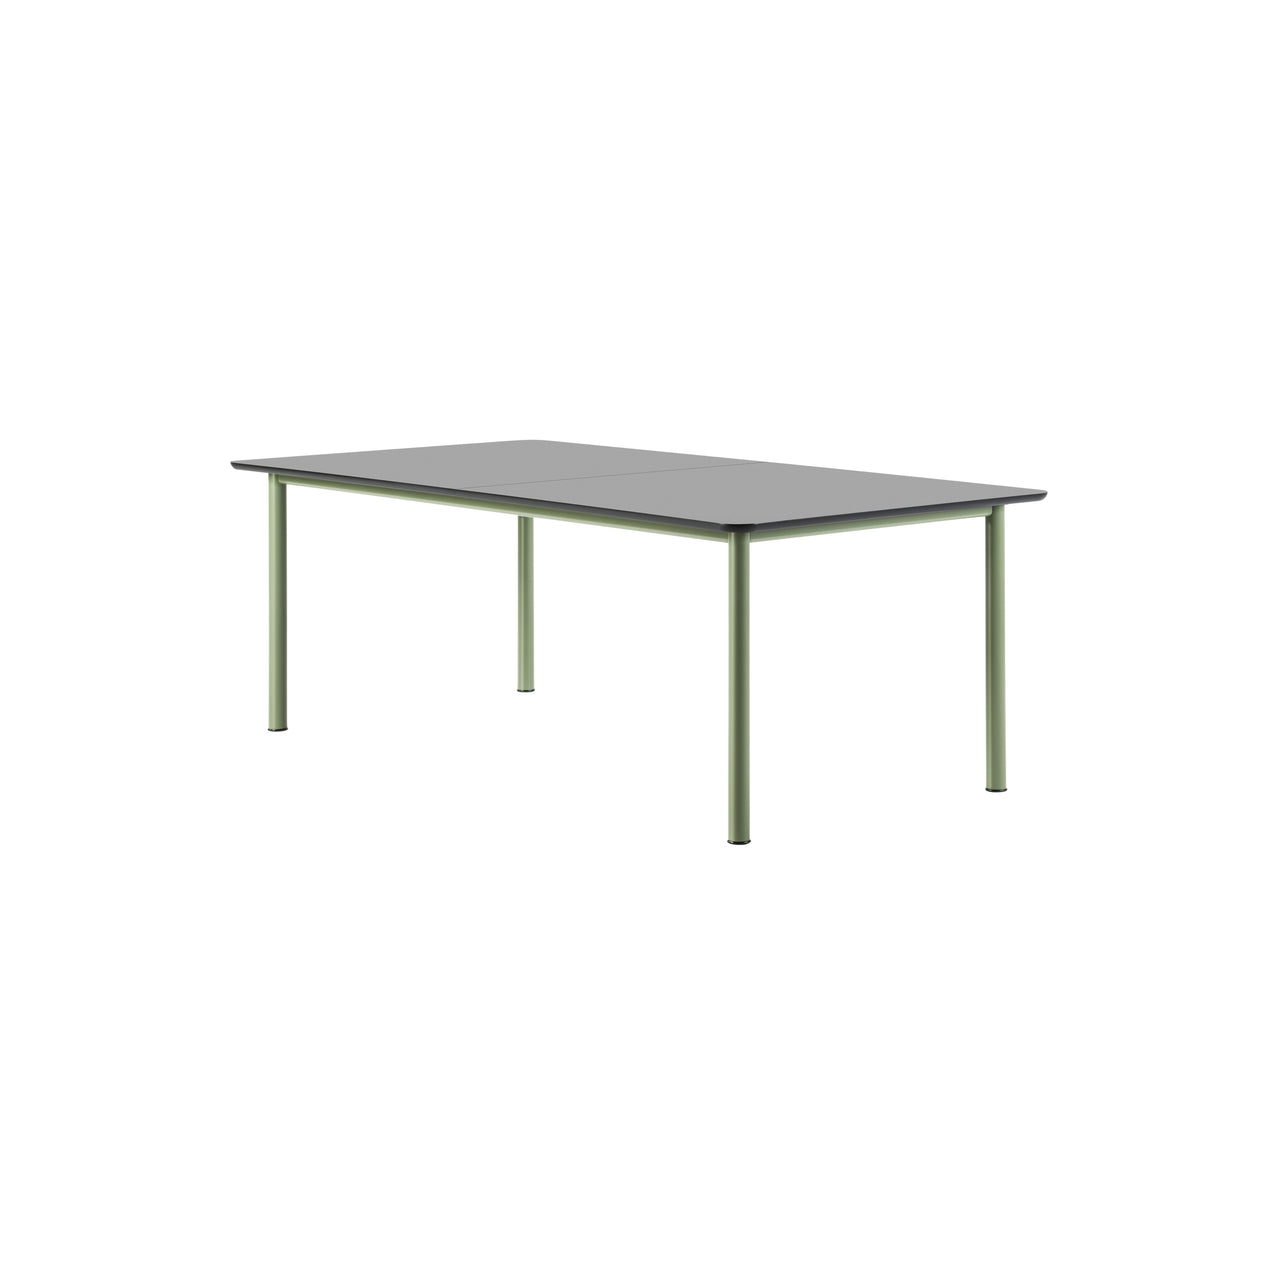 Plan Extendable Table: Black Laminate + Modernist Green